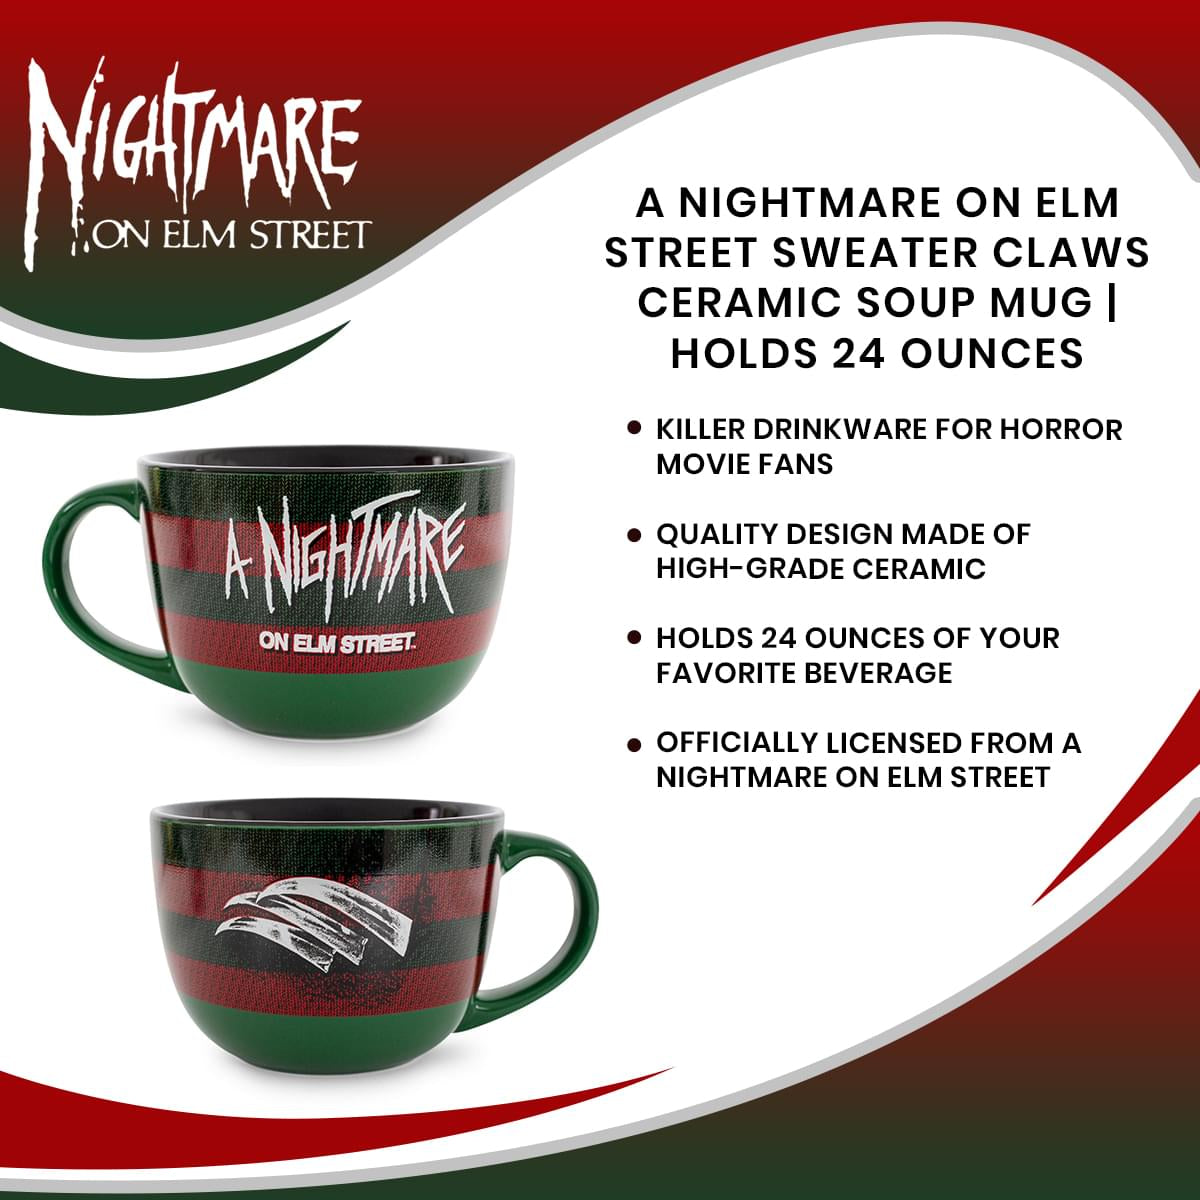 A Nightmare on Elm Street Sweater Claws Ceramic Soup Mug | Holds 24 Ounces